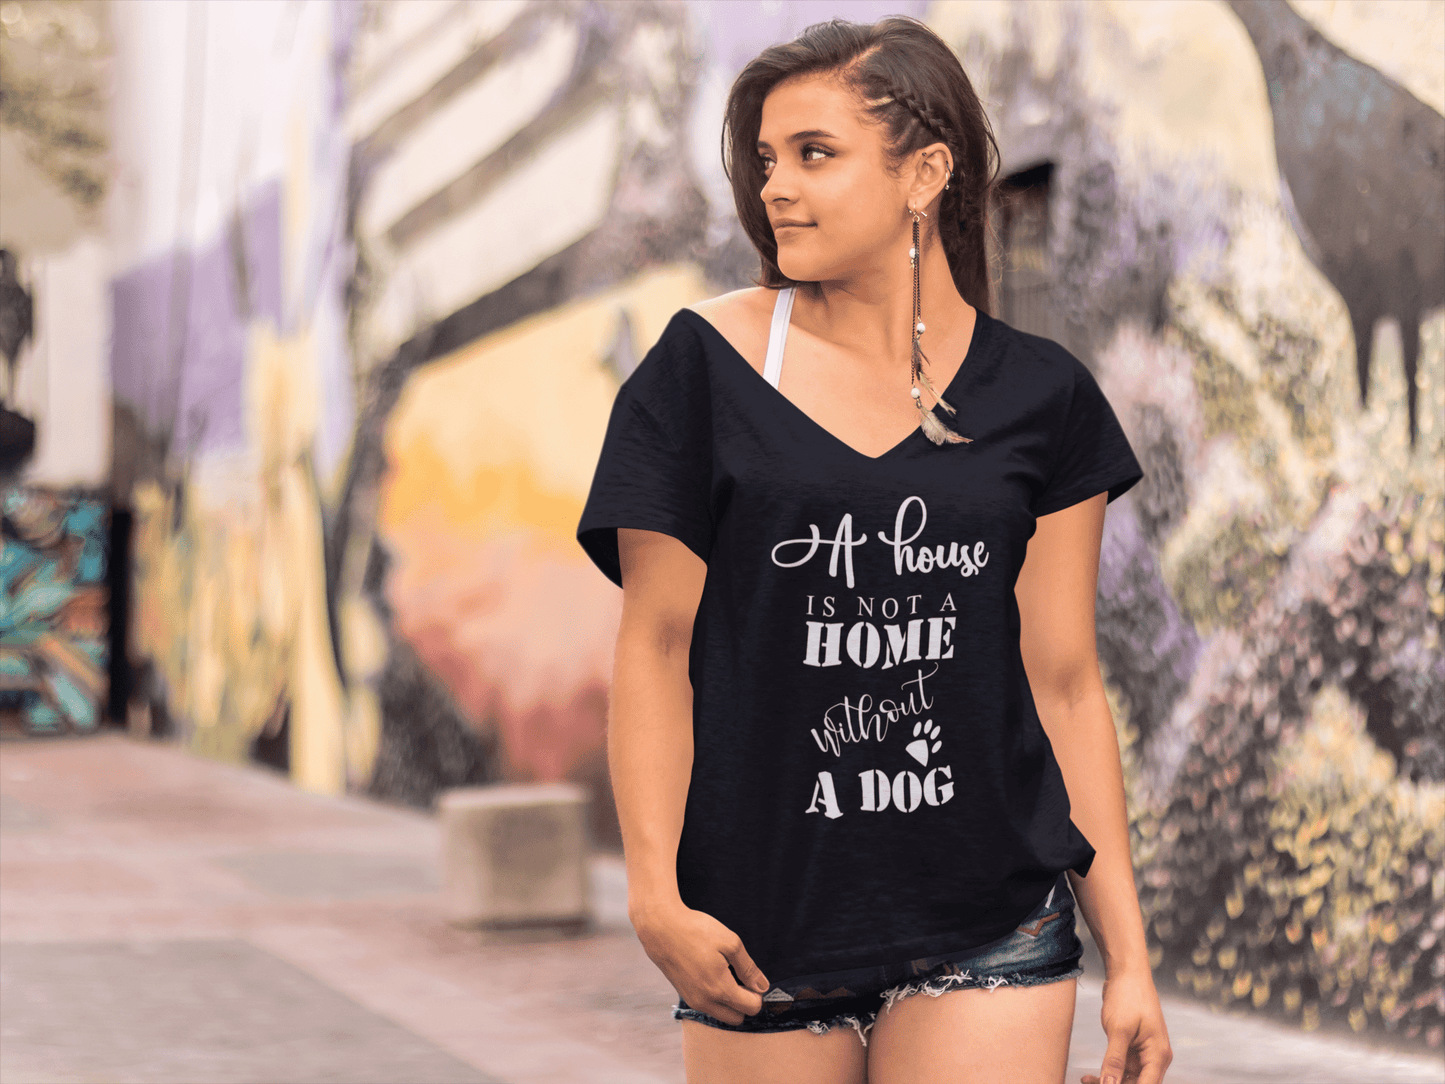 ULTRABASIC Women's T-Shirt A House is Not a Home Without a Dog - Short Sleeve Tee Shirt Tops